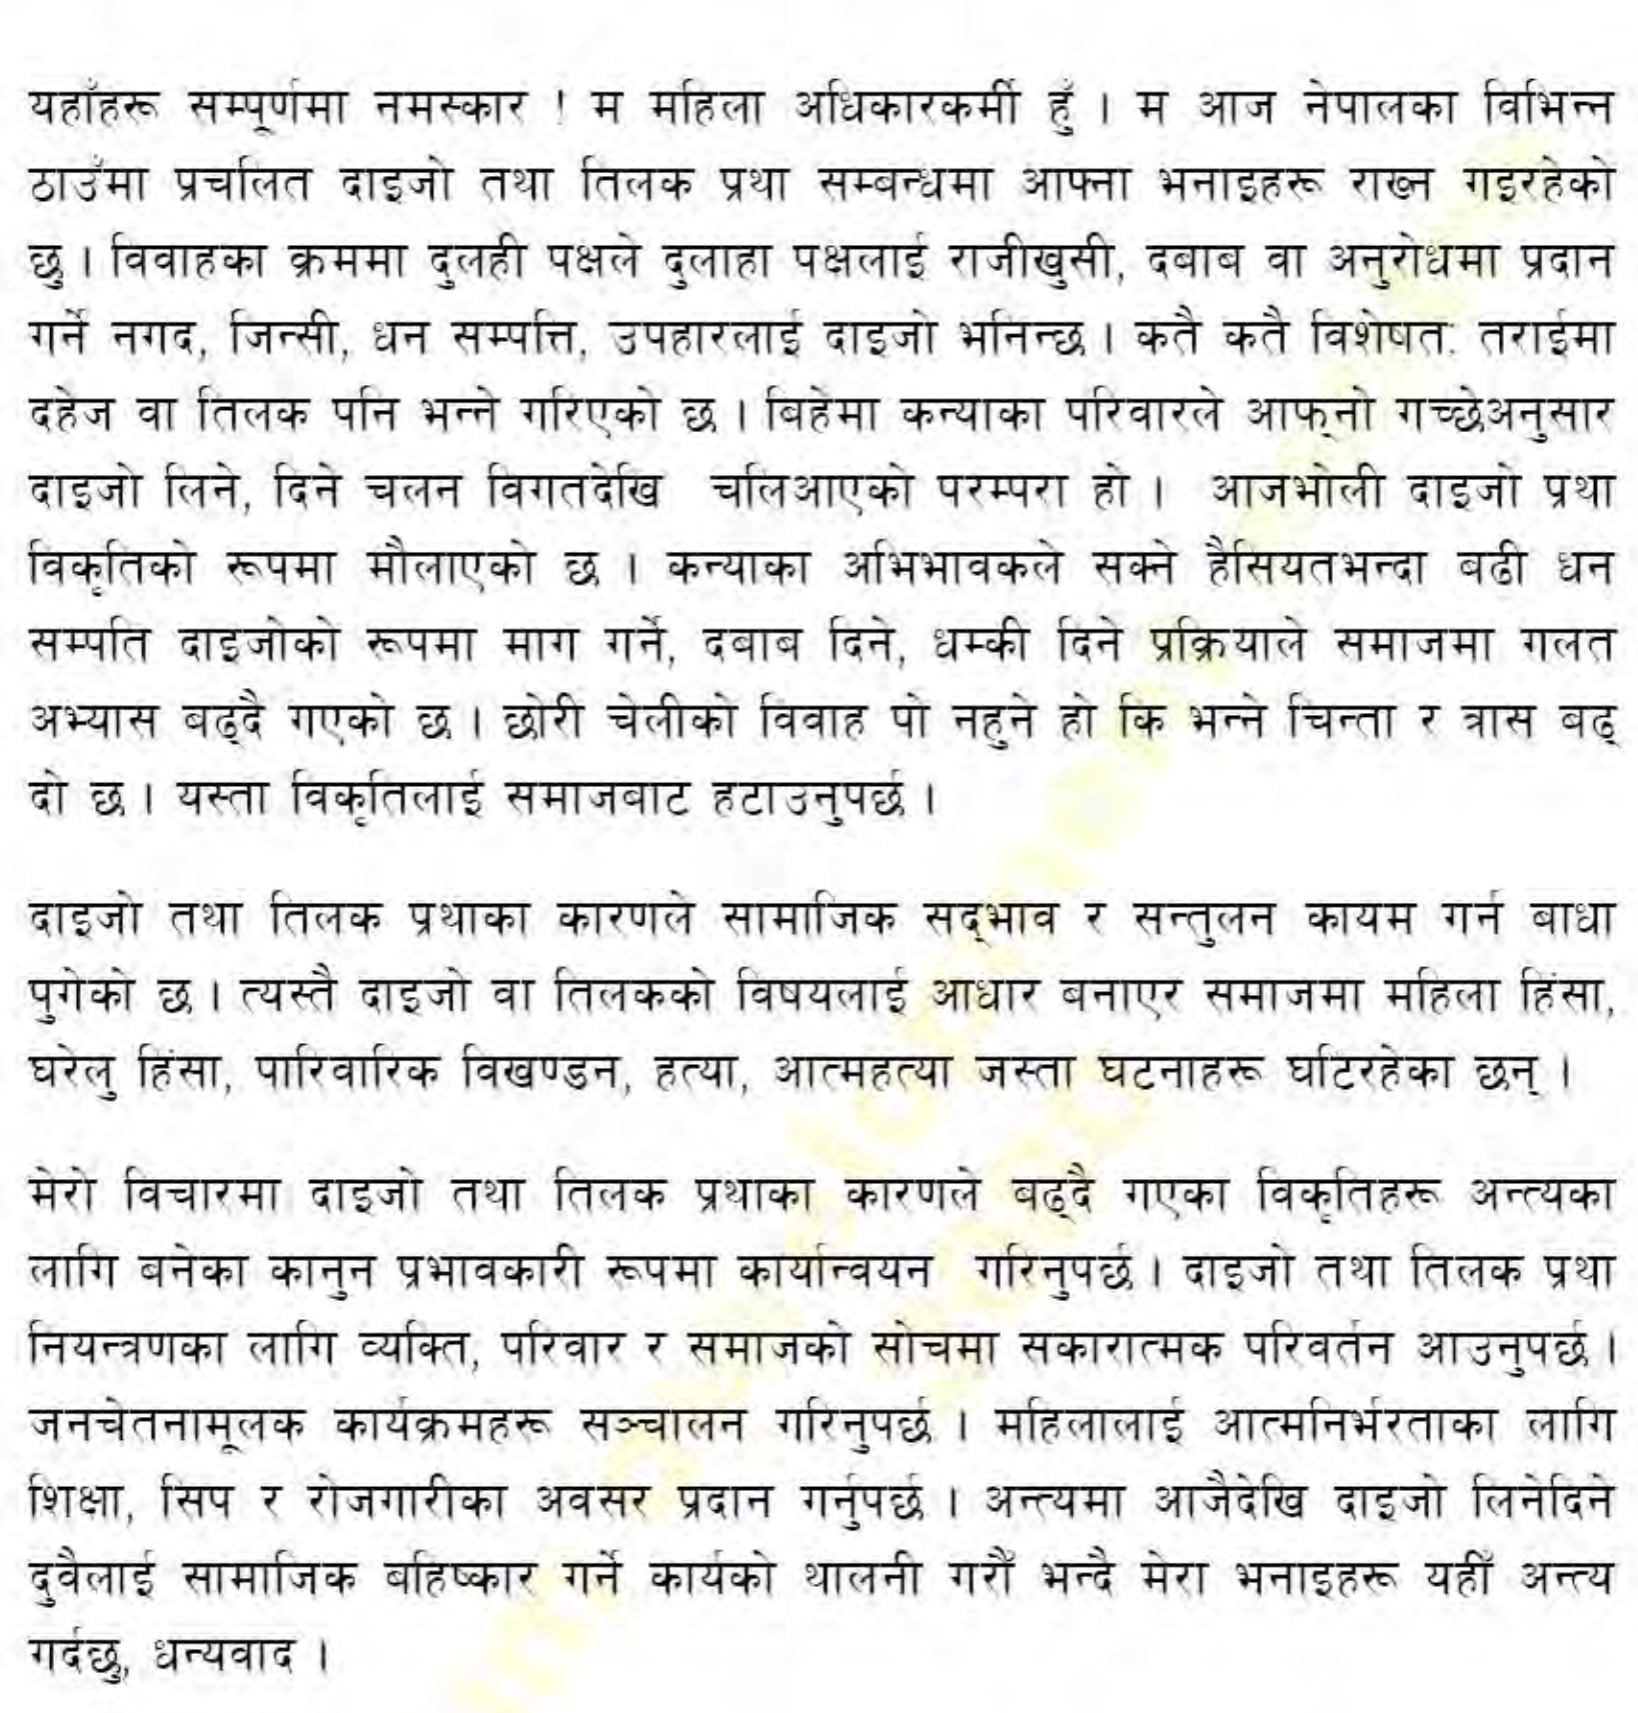 Class 10 Social Studies Unit 4 Samajik Samasya Samadhan Lesson 5 Andhavishwas Hataaun Exercise Question Answer 2080 Guide.